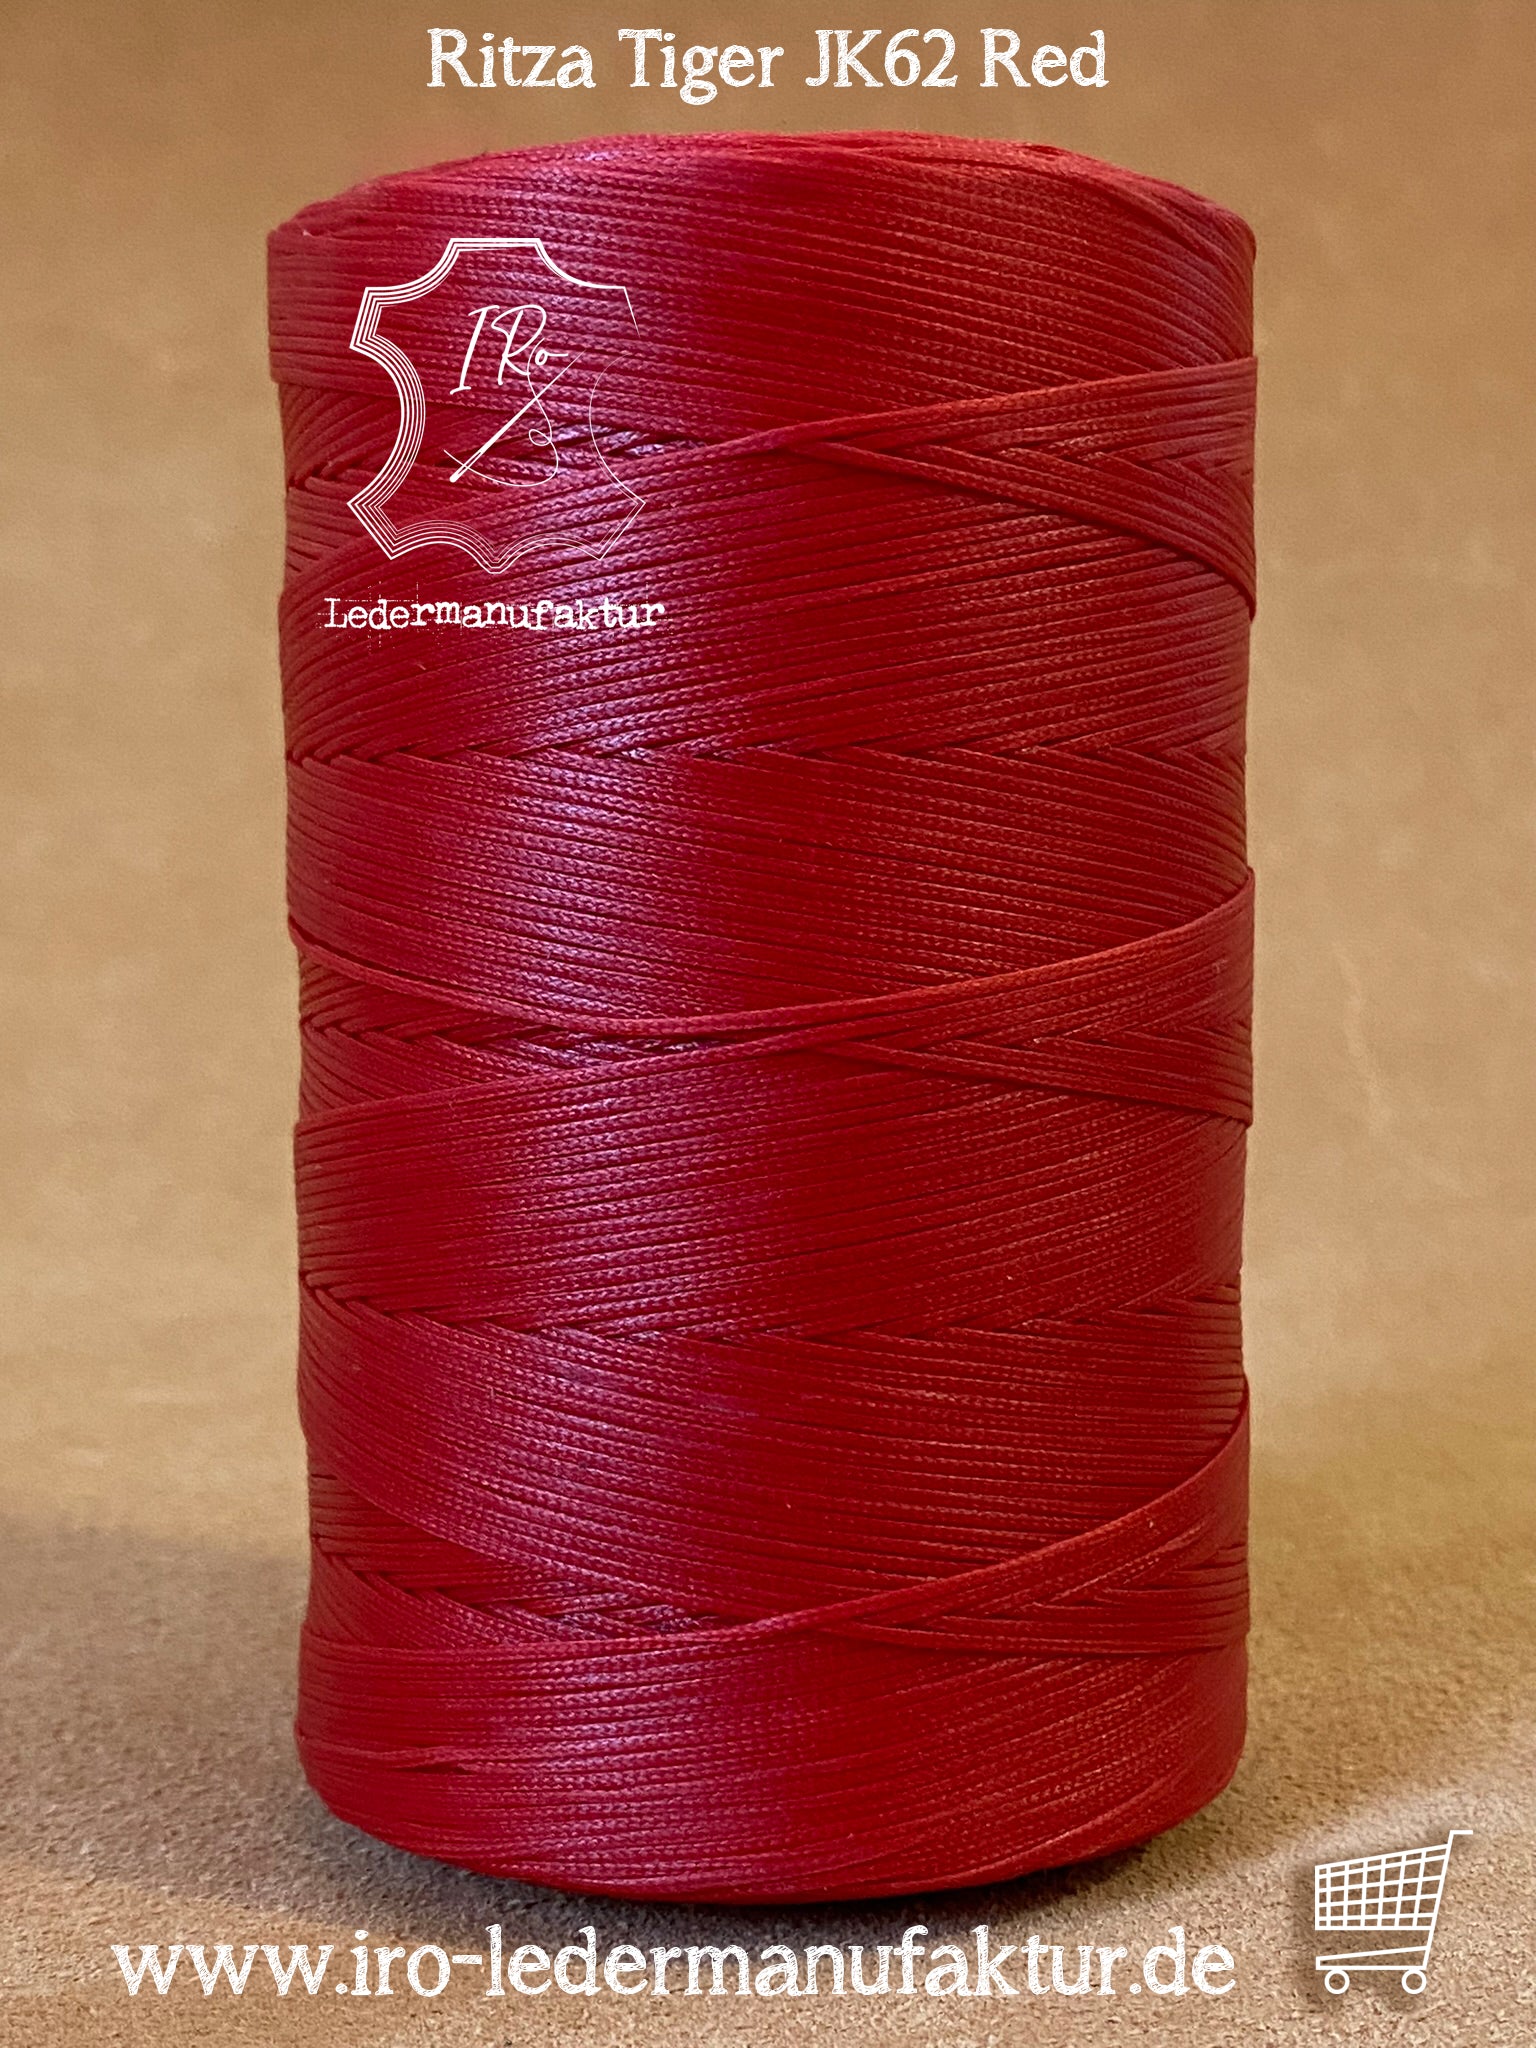  0.8mm Grey Ritza 25 Tiger Waxed Polyester Thread 25-500m Length  (50m). Julius Koch Leather Hand Sewing Thread